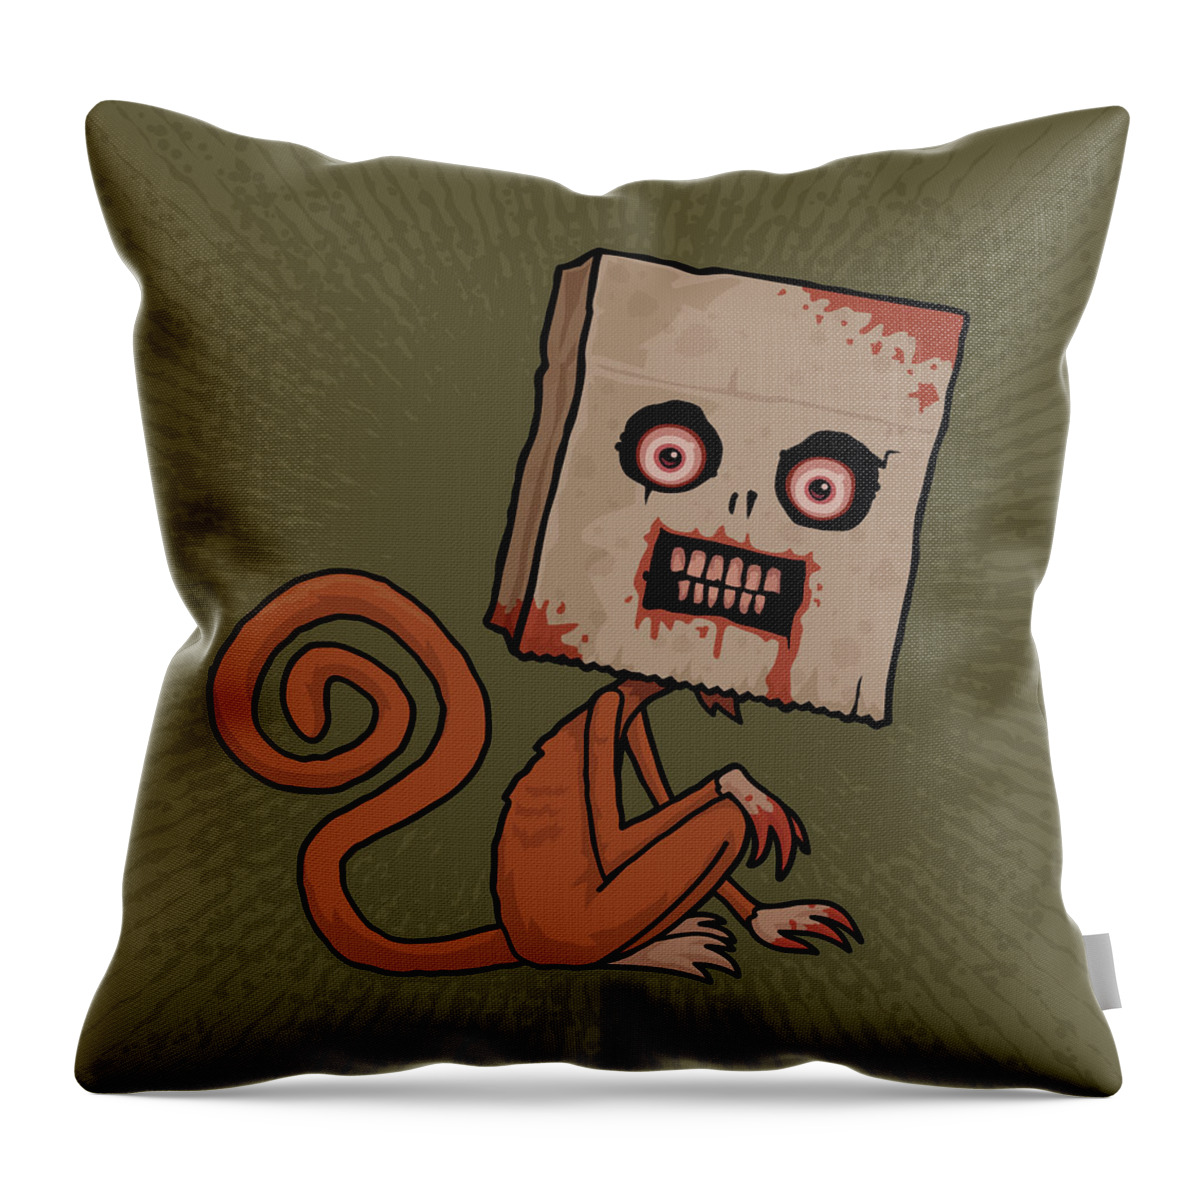 Monkey Throw Pillow featuring the digital art Psycho Sack Monkey by John Schwegel